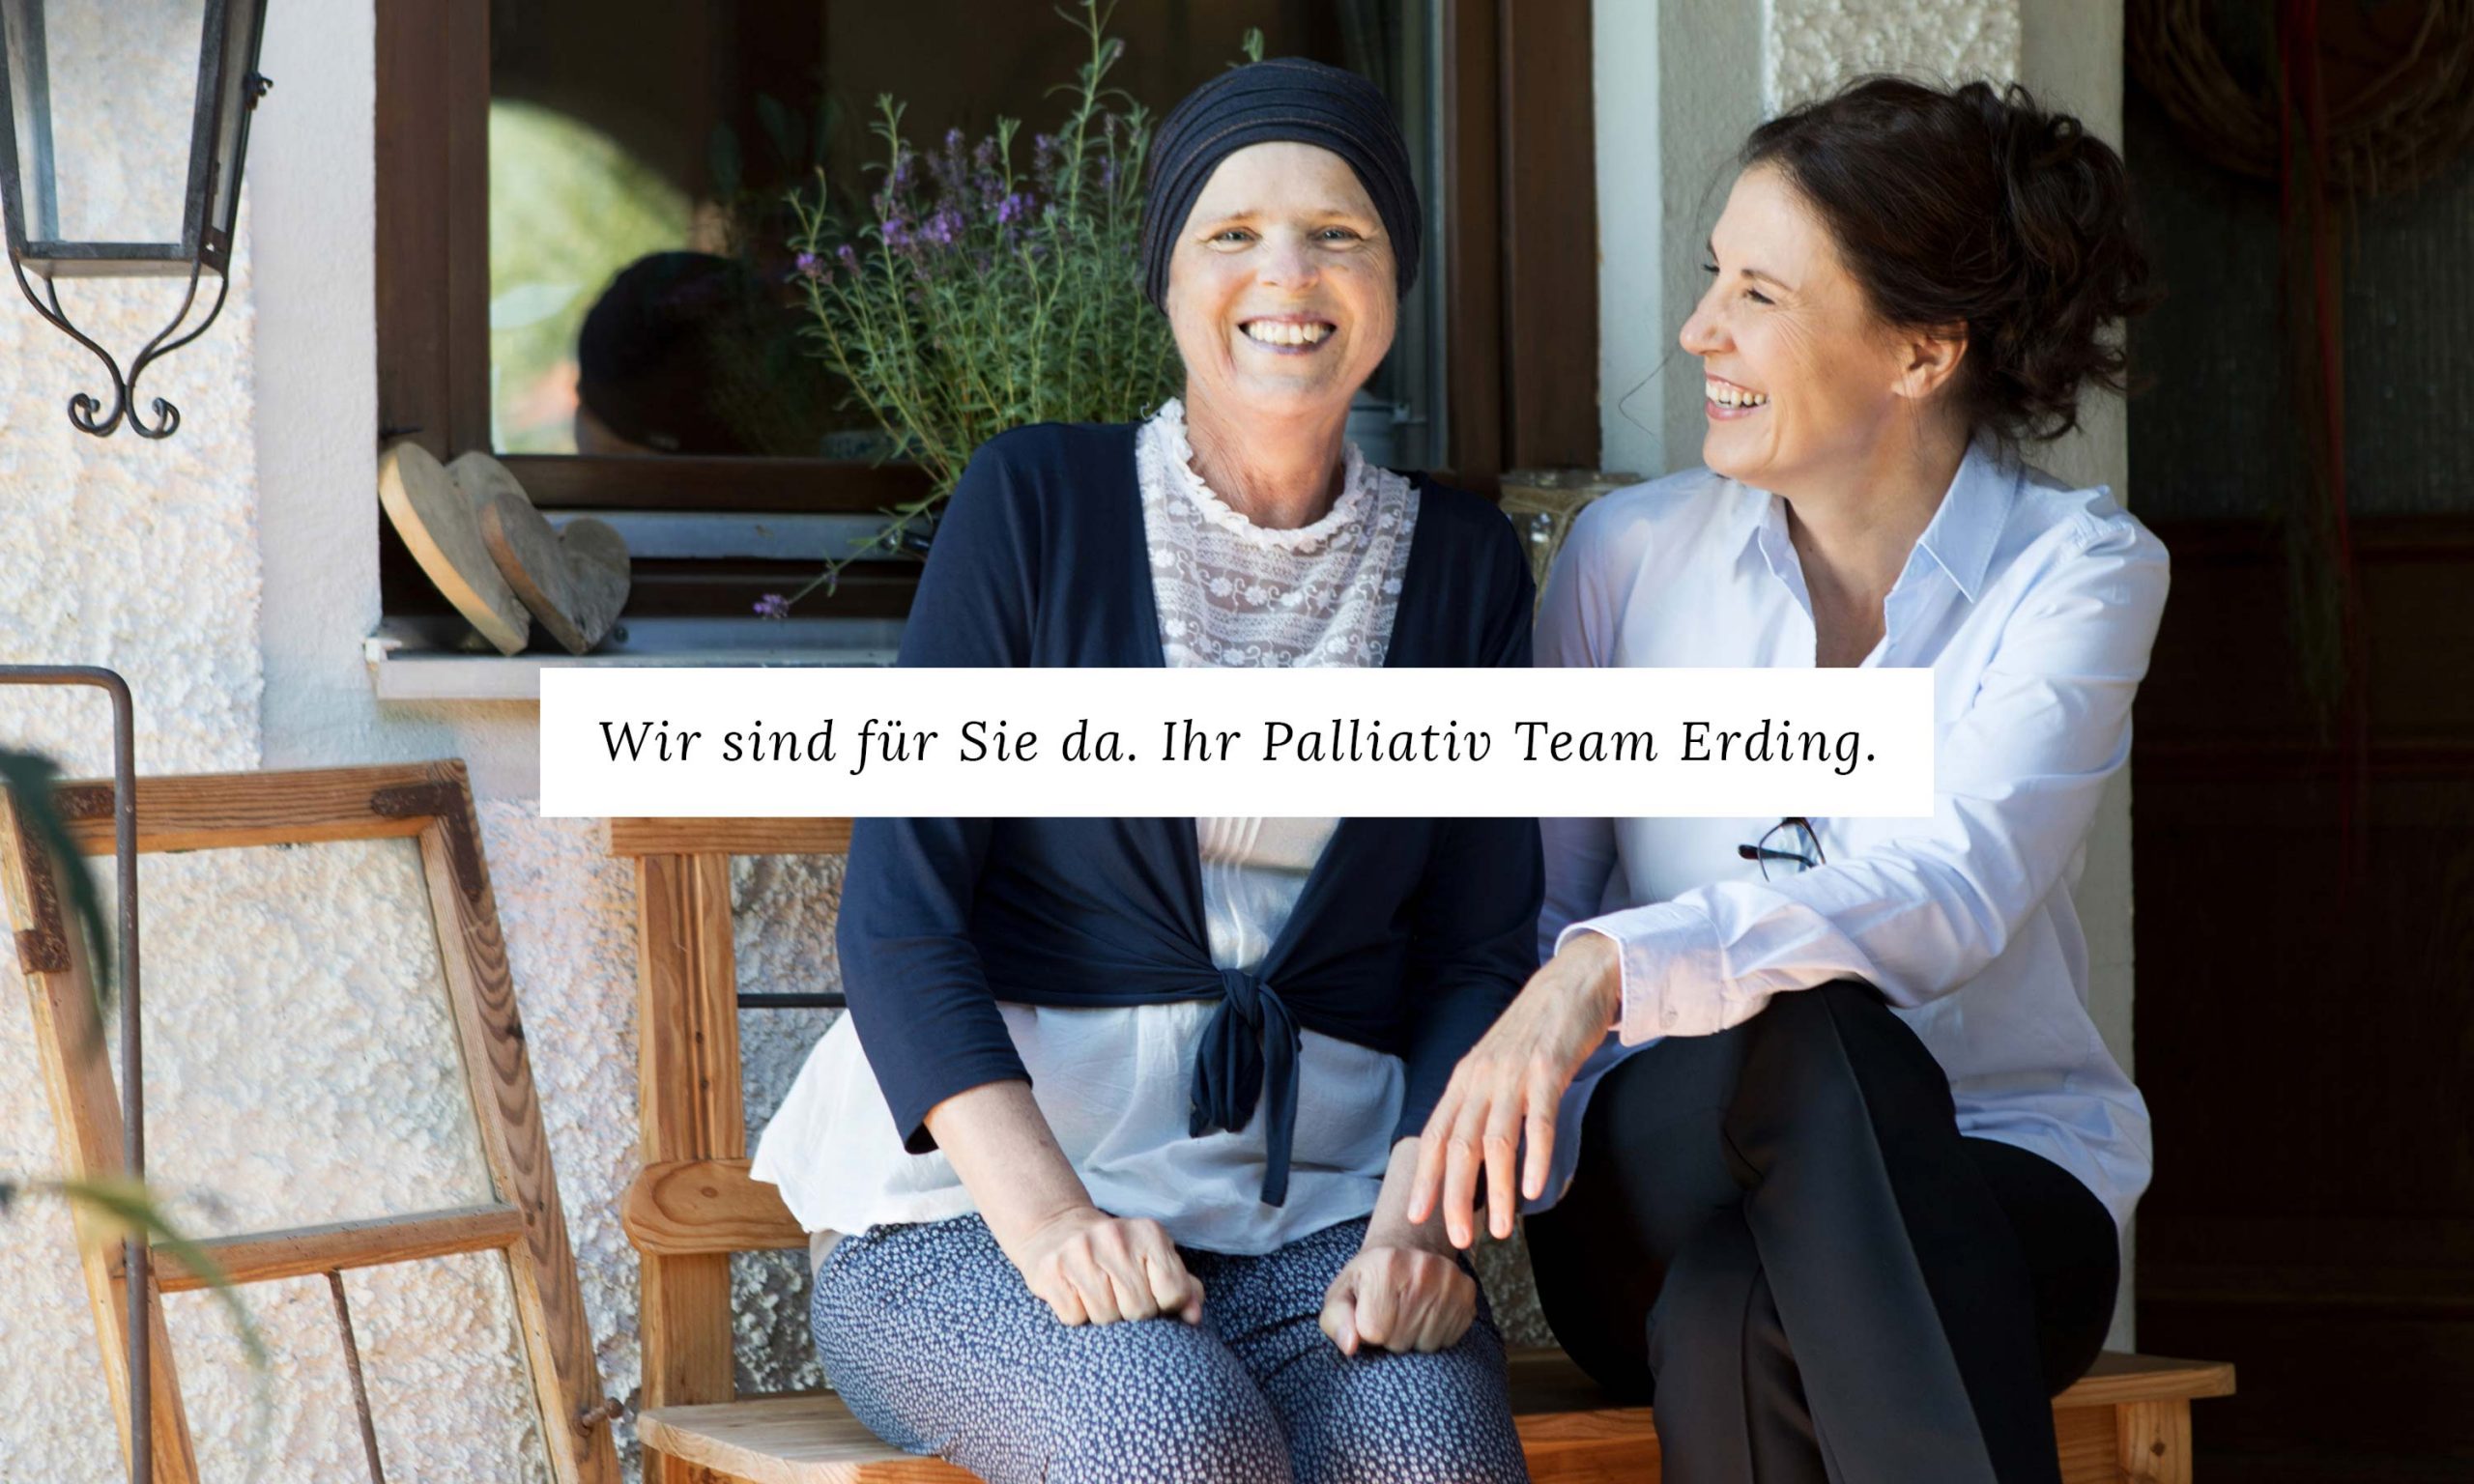 Palliativ Team Erding, Palliativmedizin, Sterbebegleitung